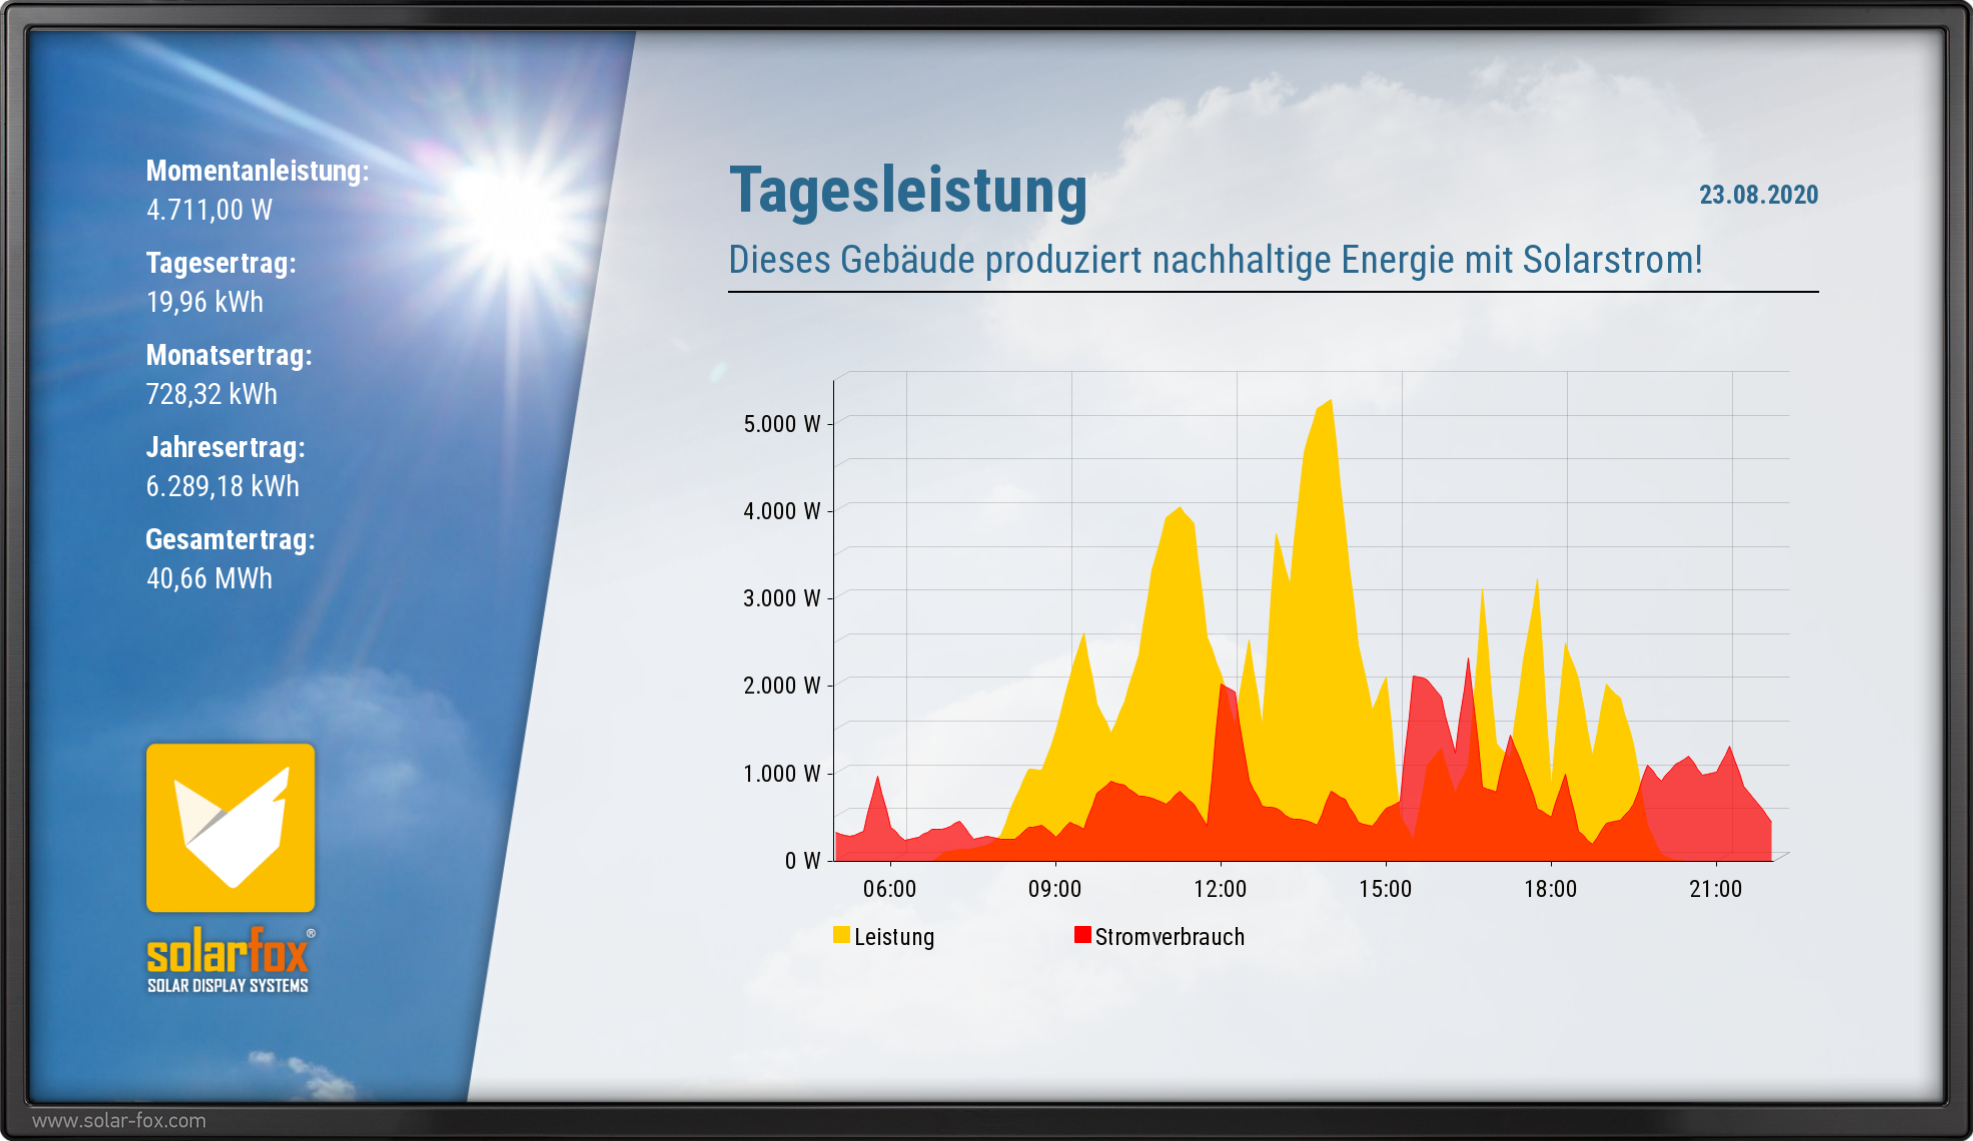 Pv Monitoring Innovativ Visualisieren Mit Solarfox Solar Blog Krannich Global Solar Distribution